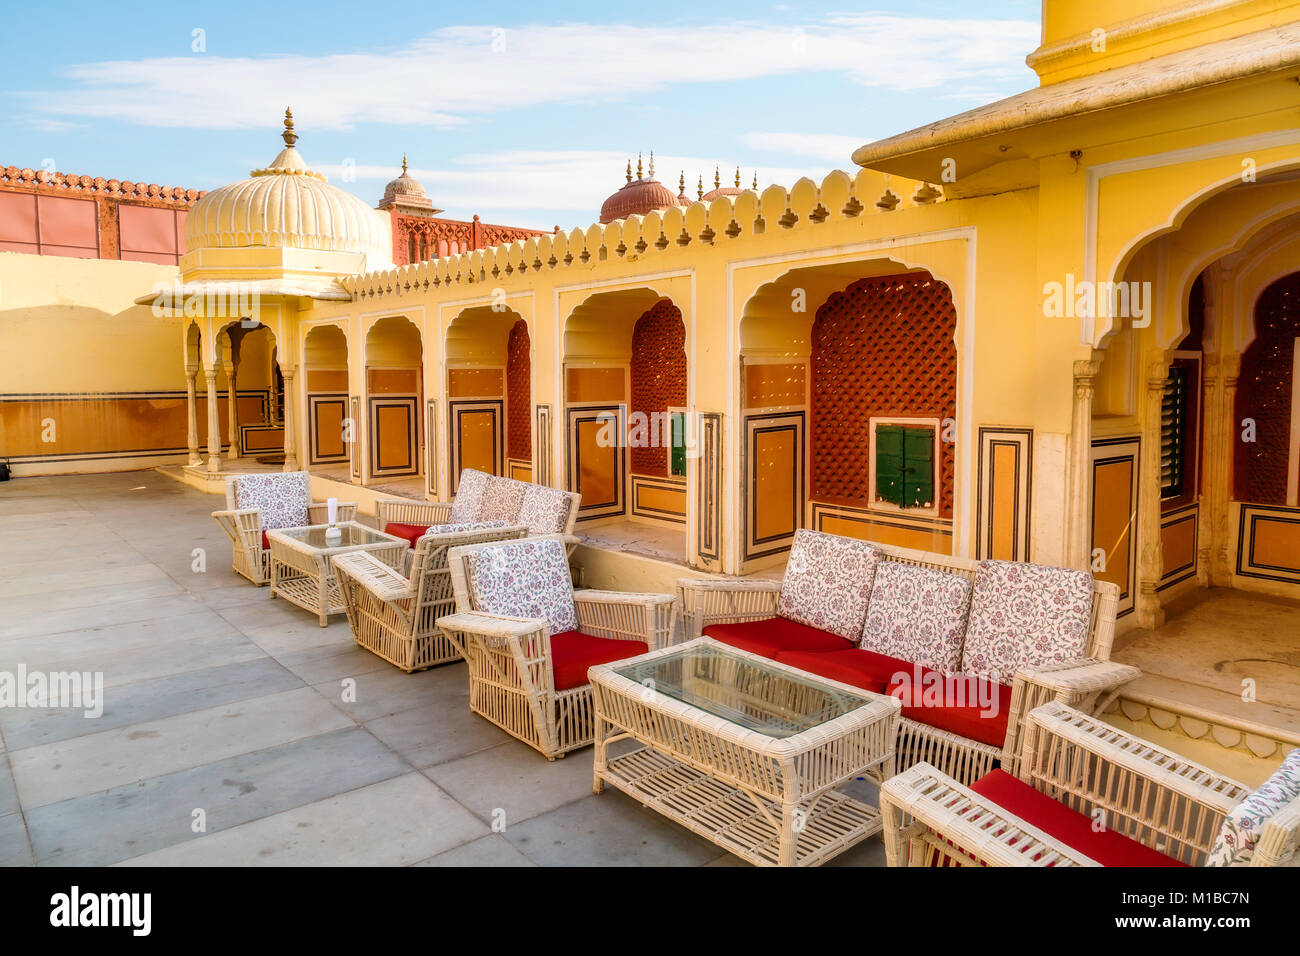 City Palace Jaipur Rajasthan - antica architettura di Rajput con vista sul cortile e regime di seduta per i turisti. Foto Stock